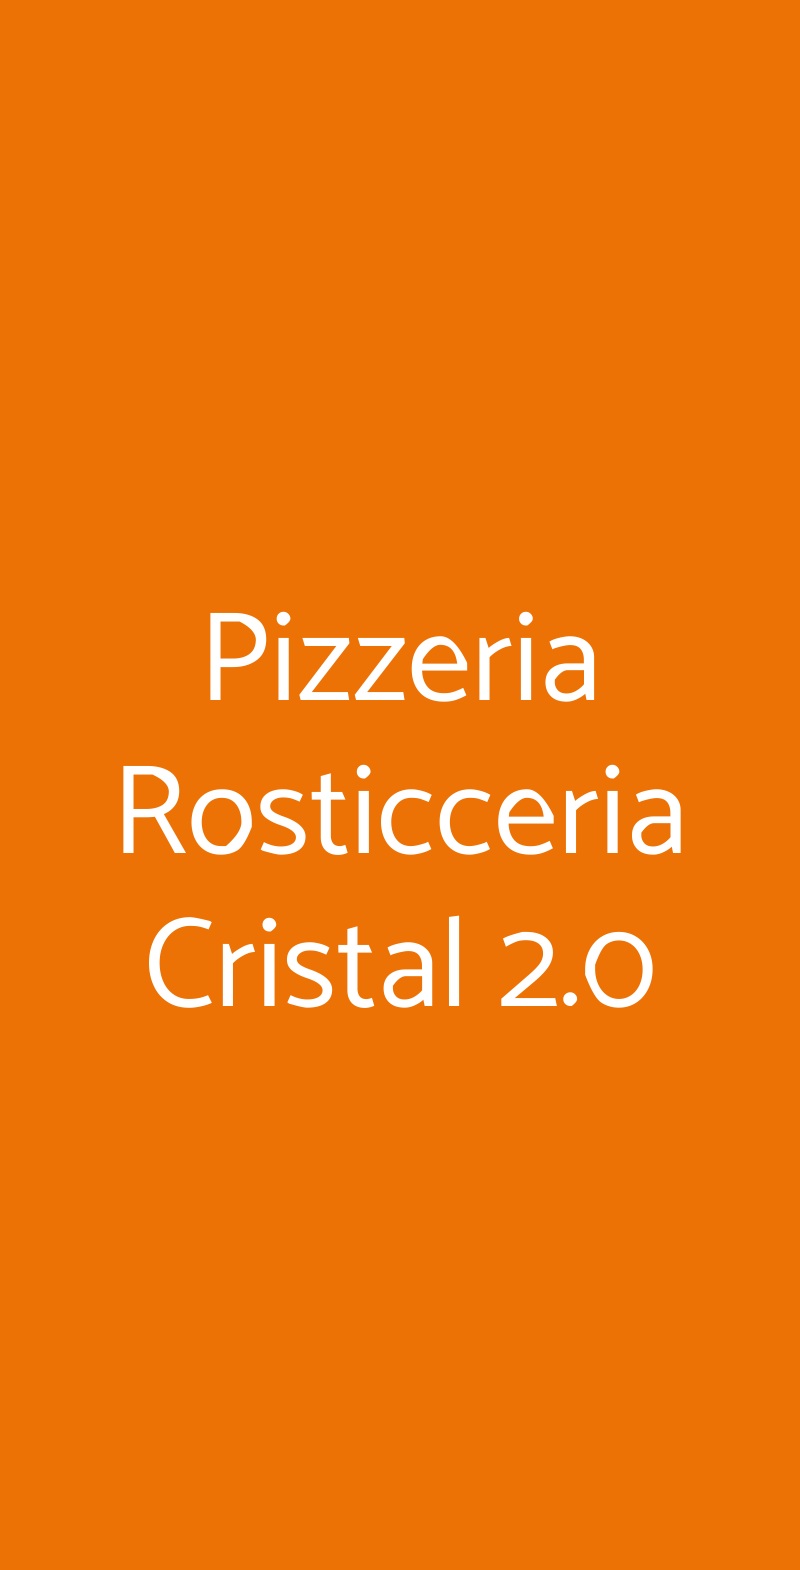 Pizzeria Rosticceria Cristal 2.0 Brescia menù 1 pagina